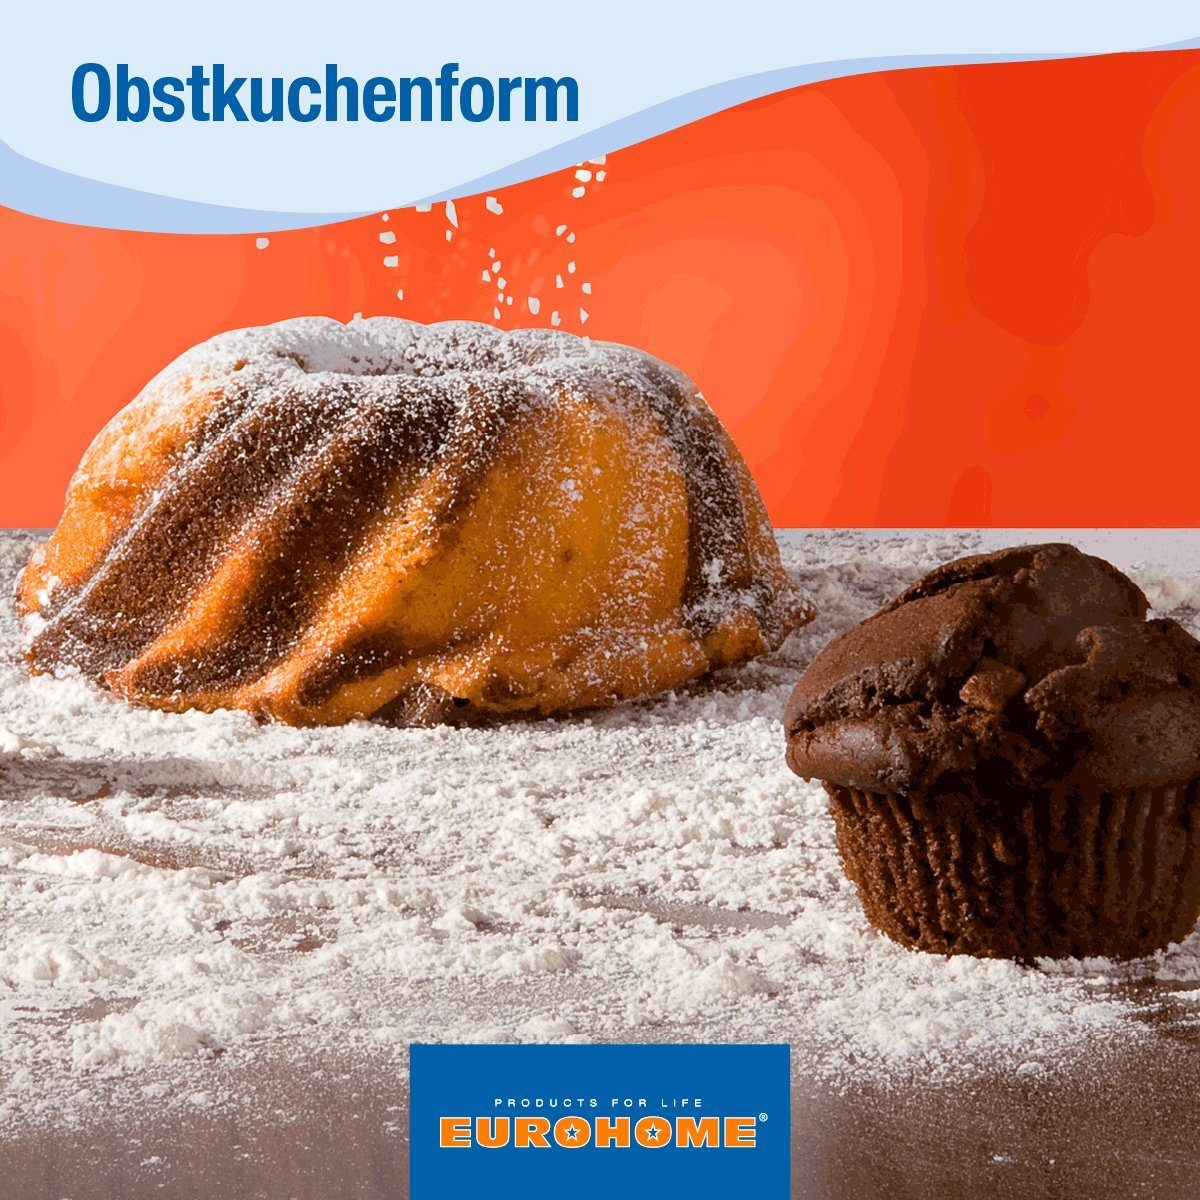 antihaft Obstkuchenform Backform - EUROHOME Kuchen rund mit Antihaftbeschichtung, rund Obstkuchenform Wellrand - Kuchenform